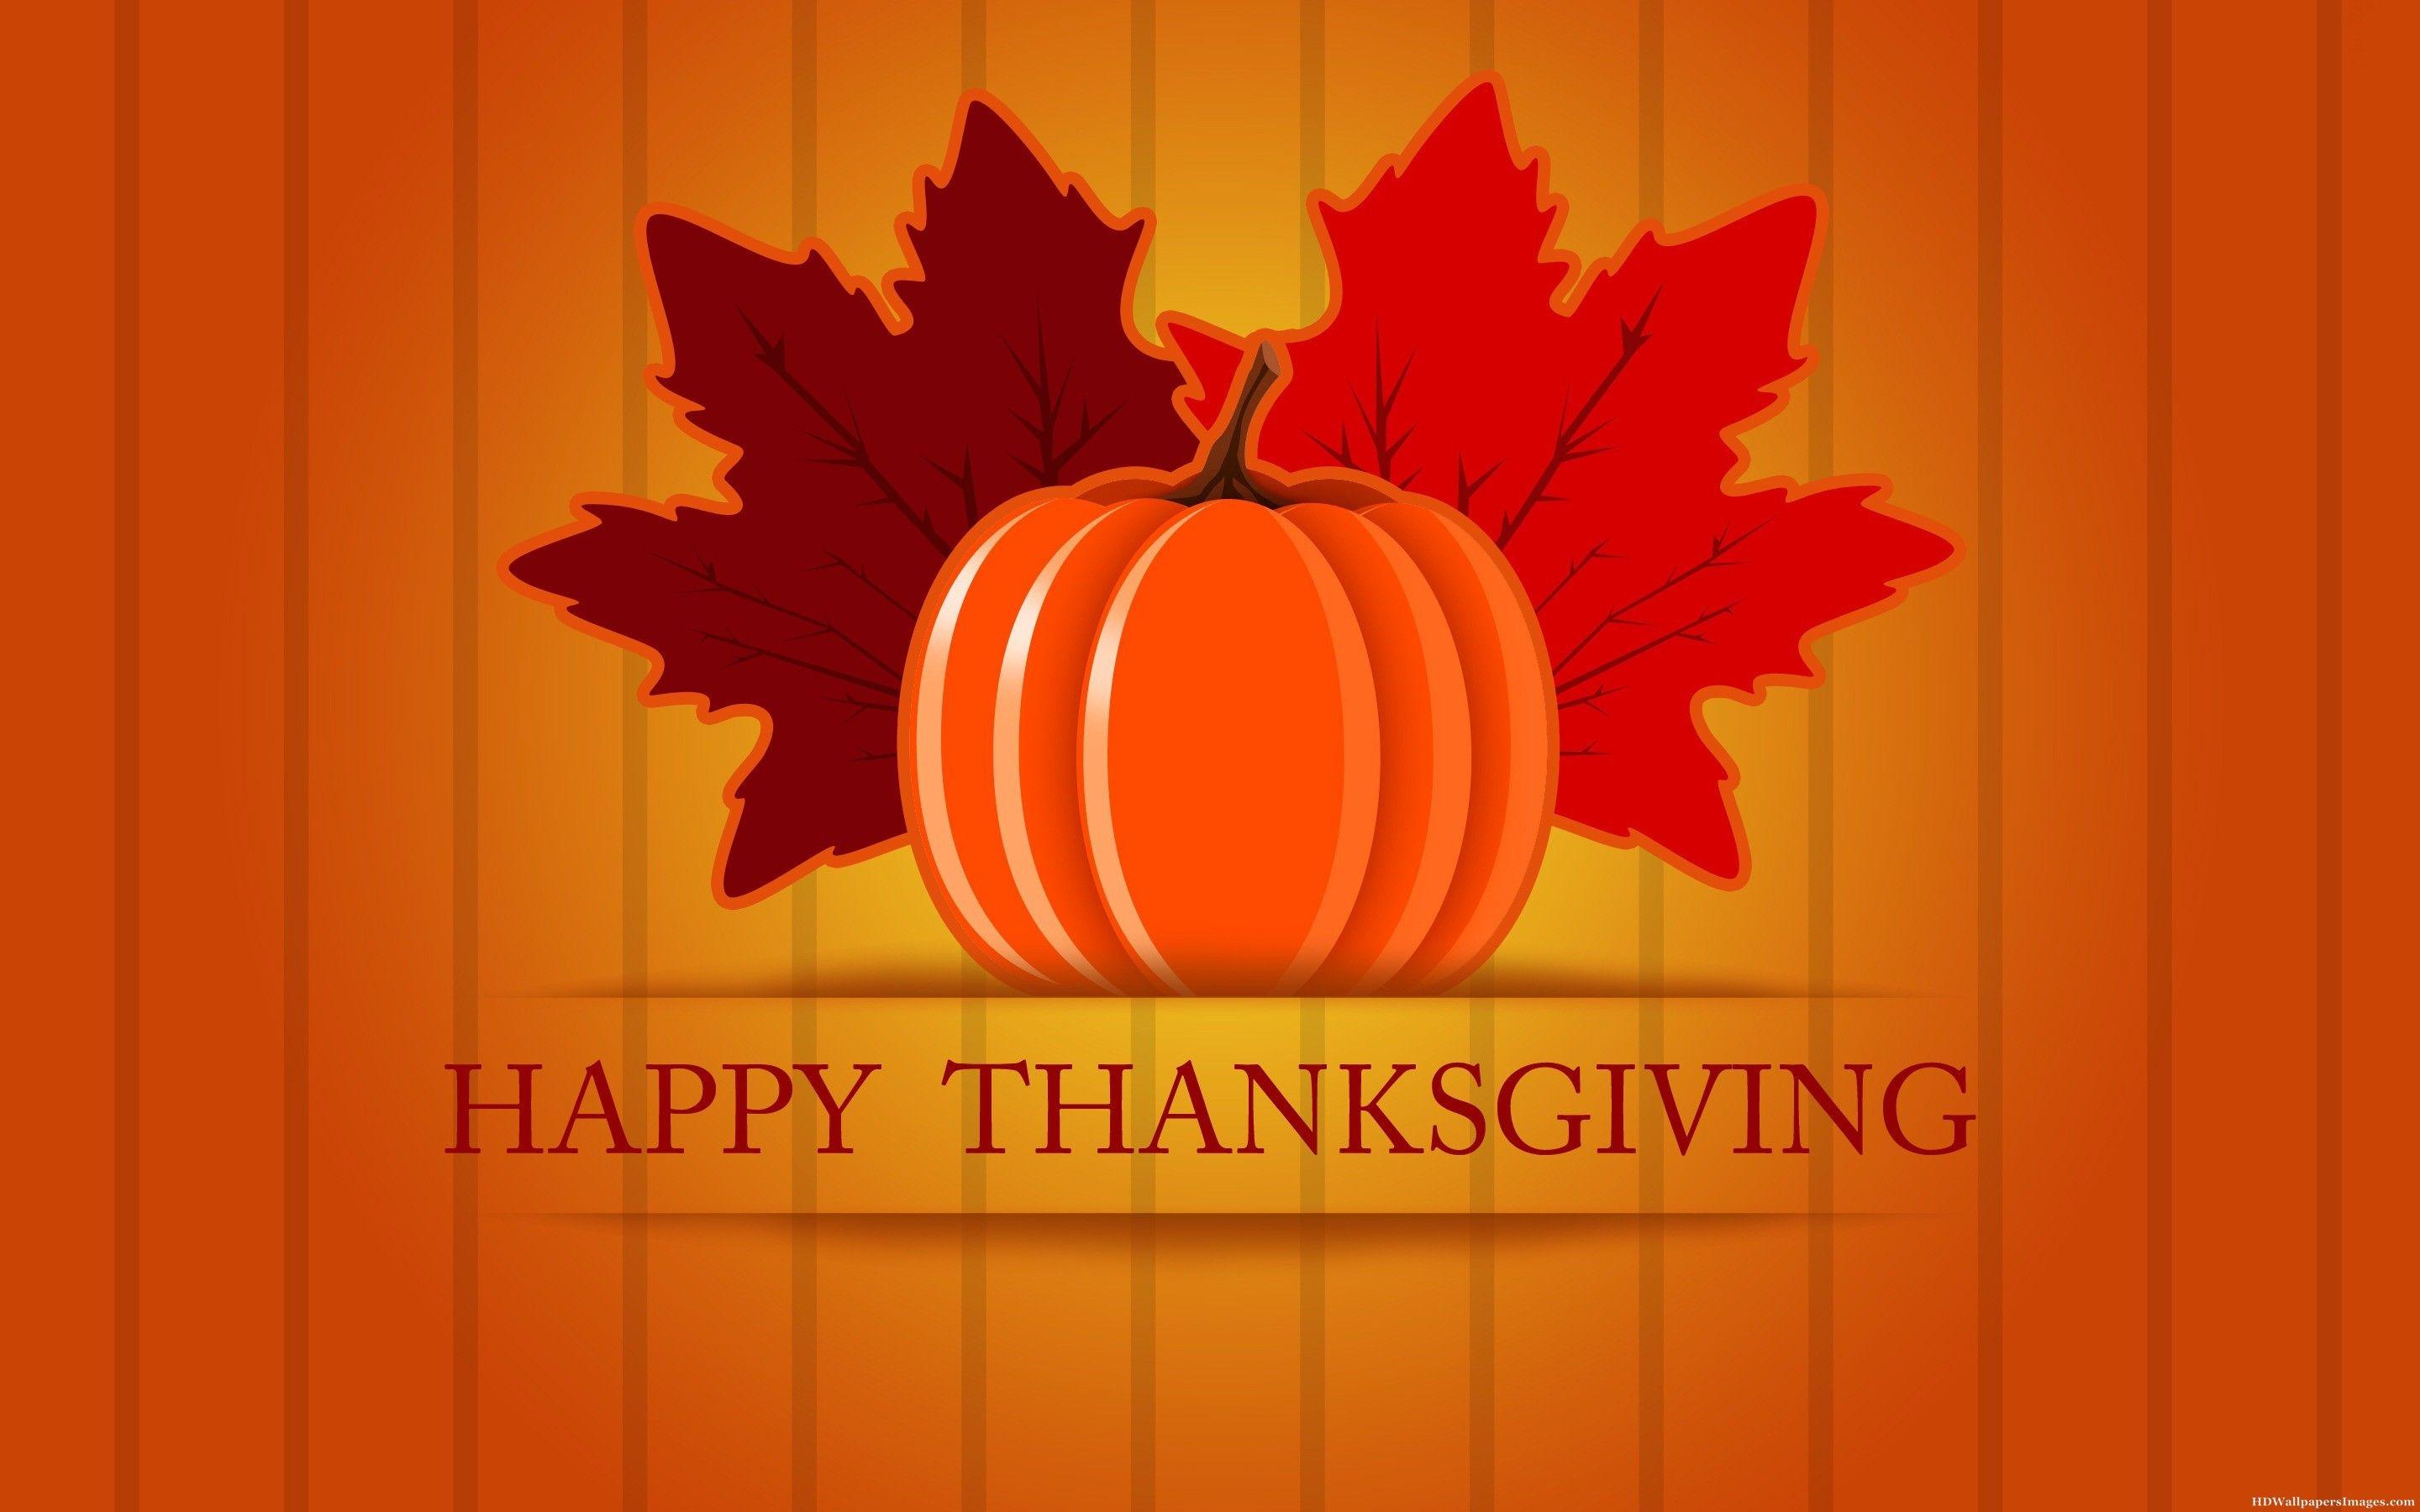 Happy Thanksgiving Desktop Image. HD Wallpaper Image